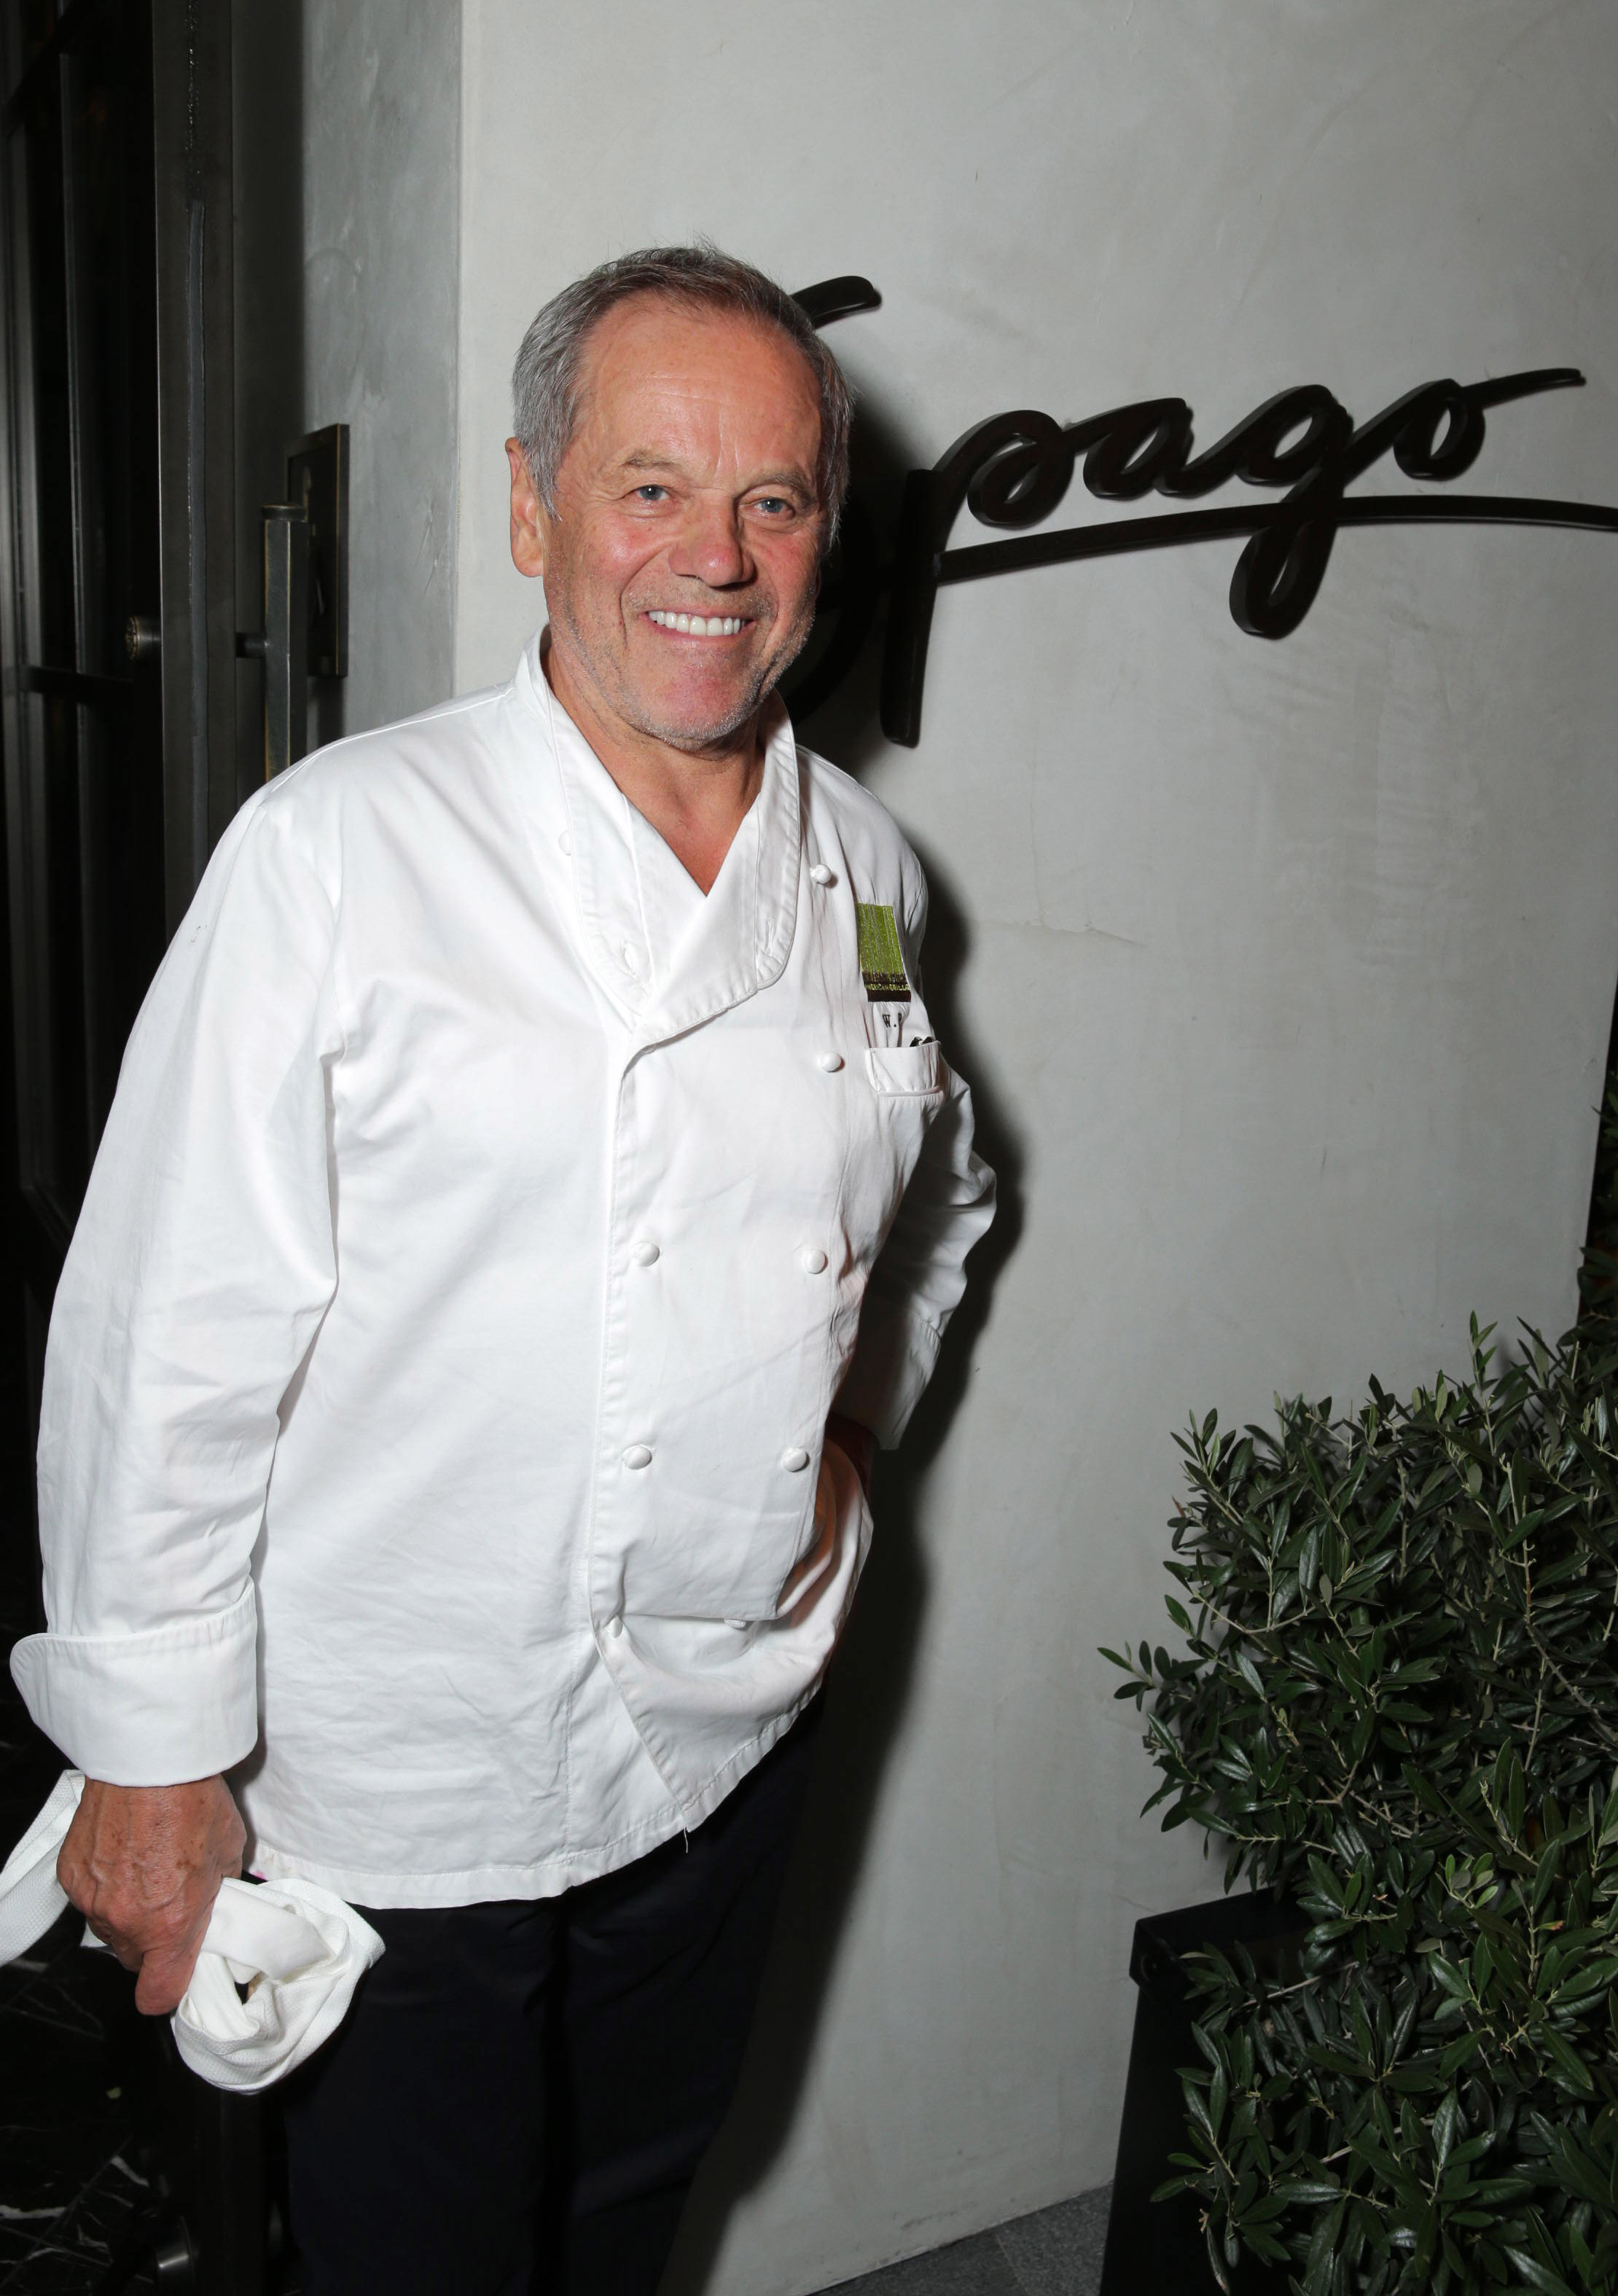 Celebrity chef Wolfgang Puck announces plans for second D.C. restaurant